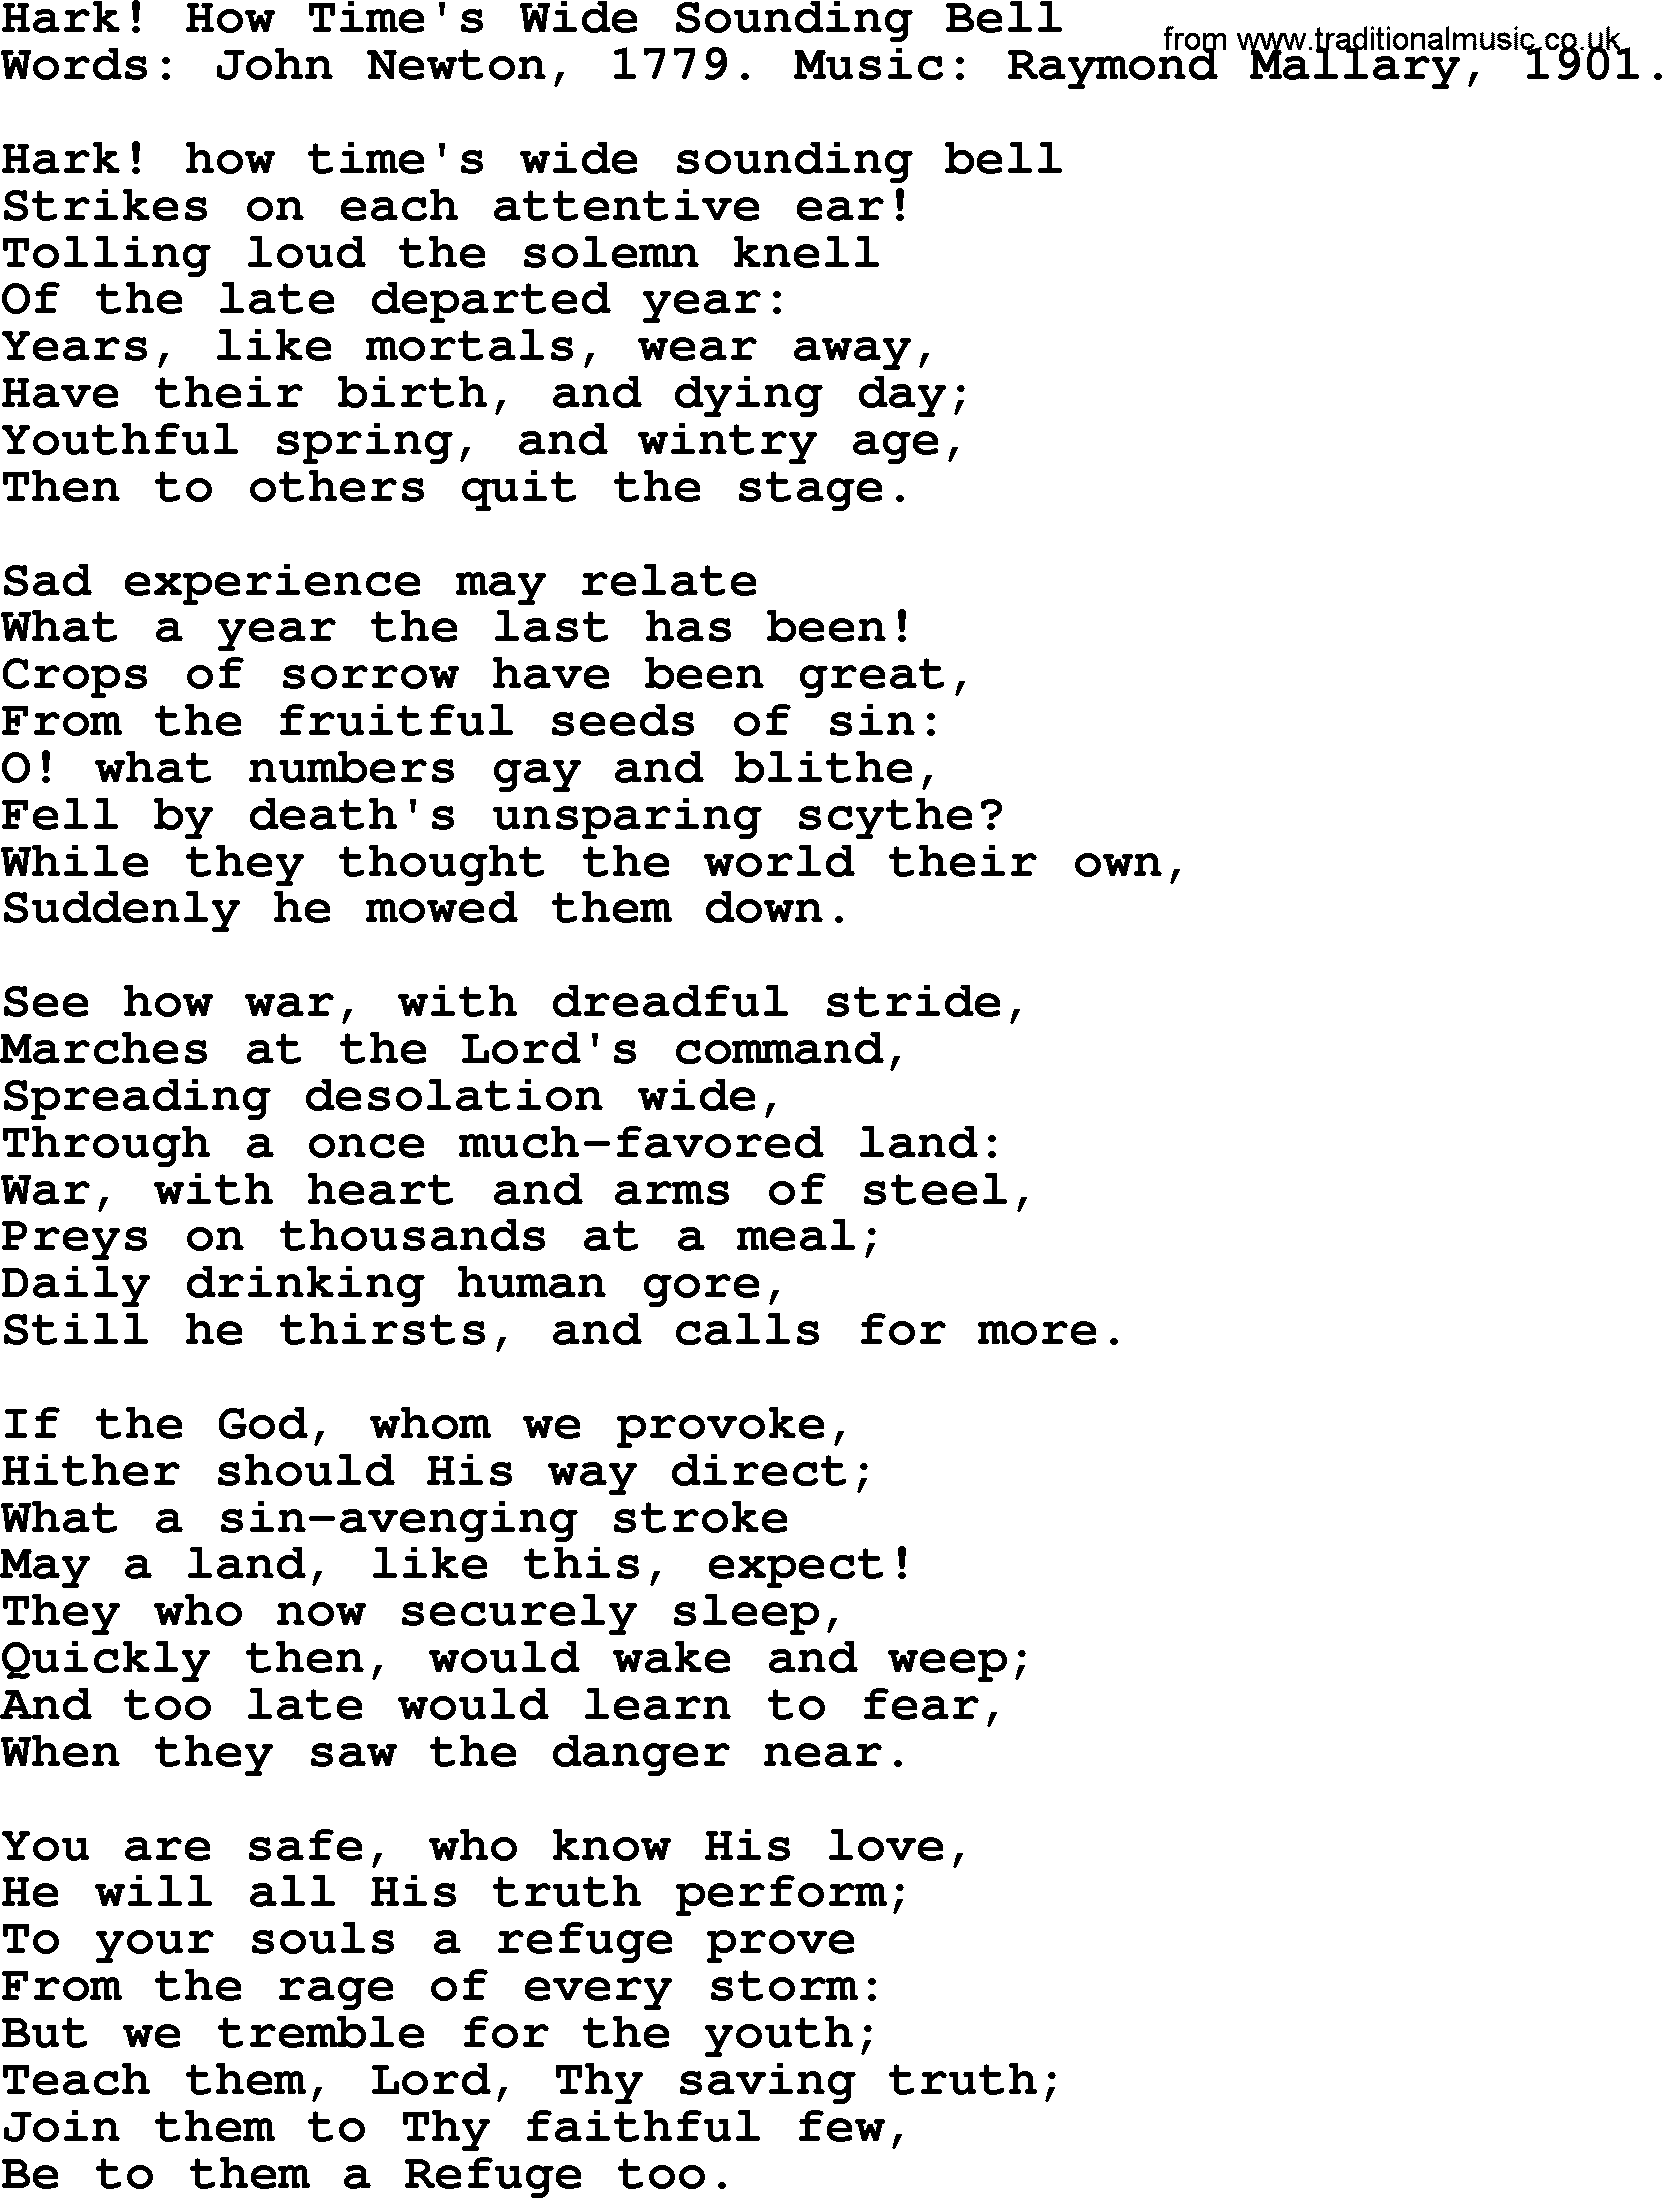 John Newton hymn: Hark  How Time's Wide Sounding Bell, lyrics